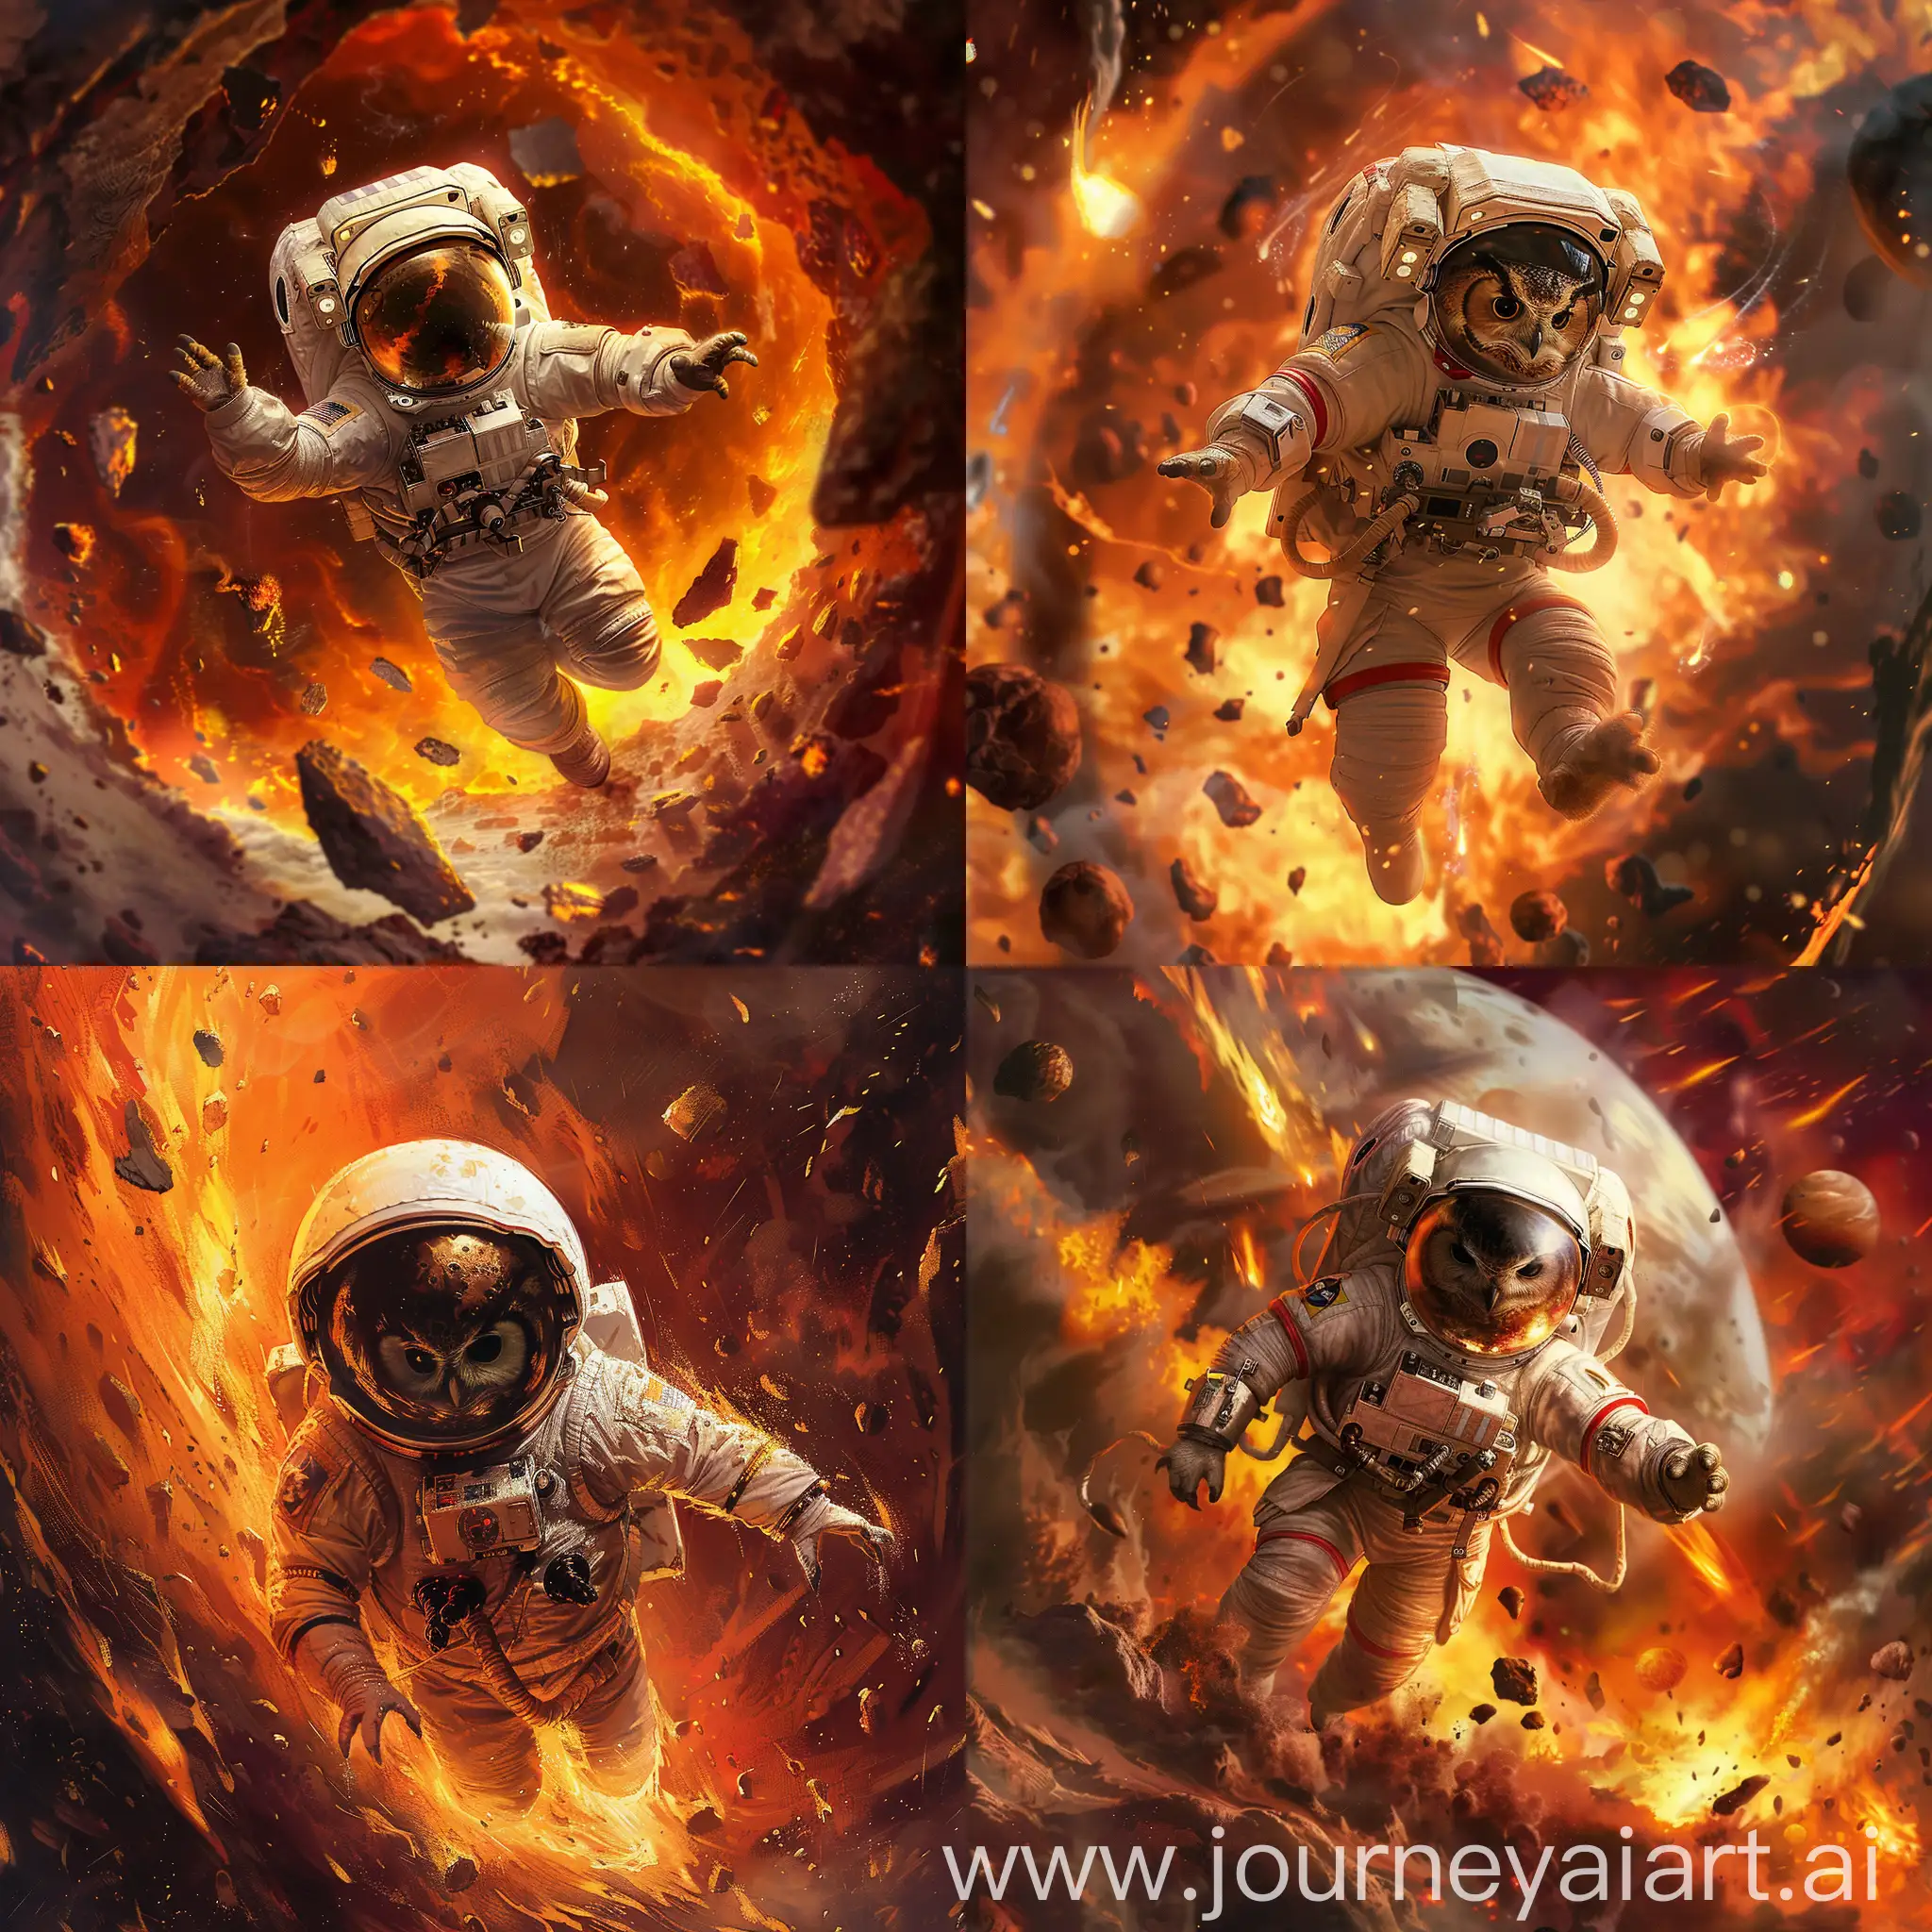 Astronaut-Owl-Exploring-Fiery-Planet